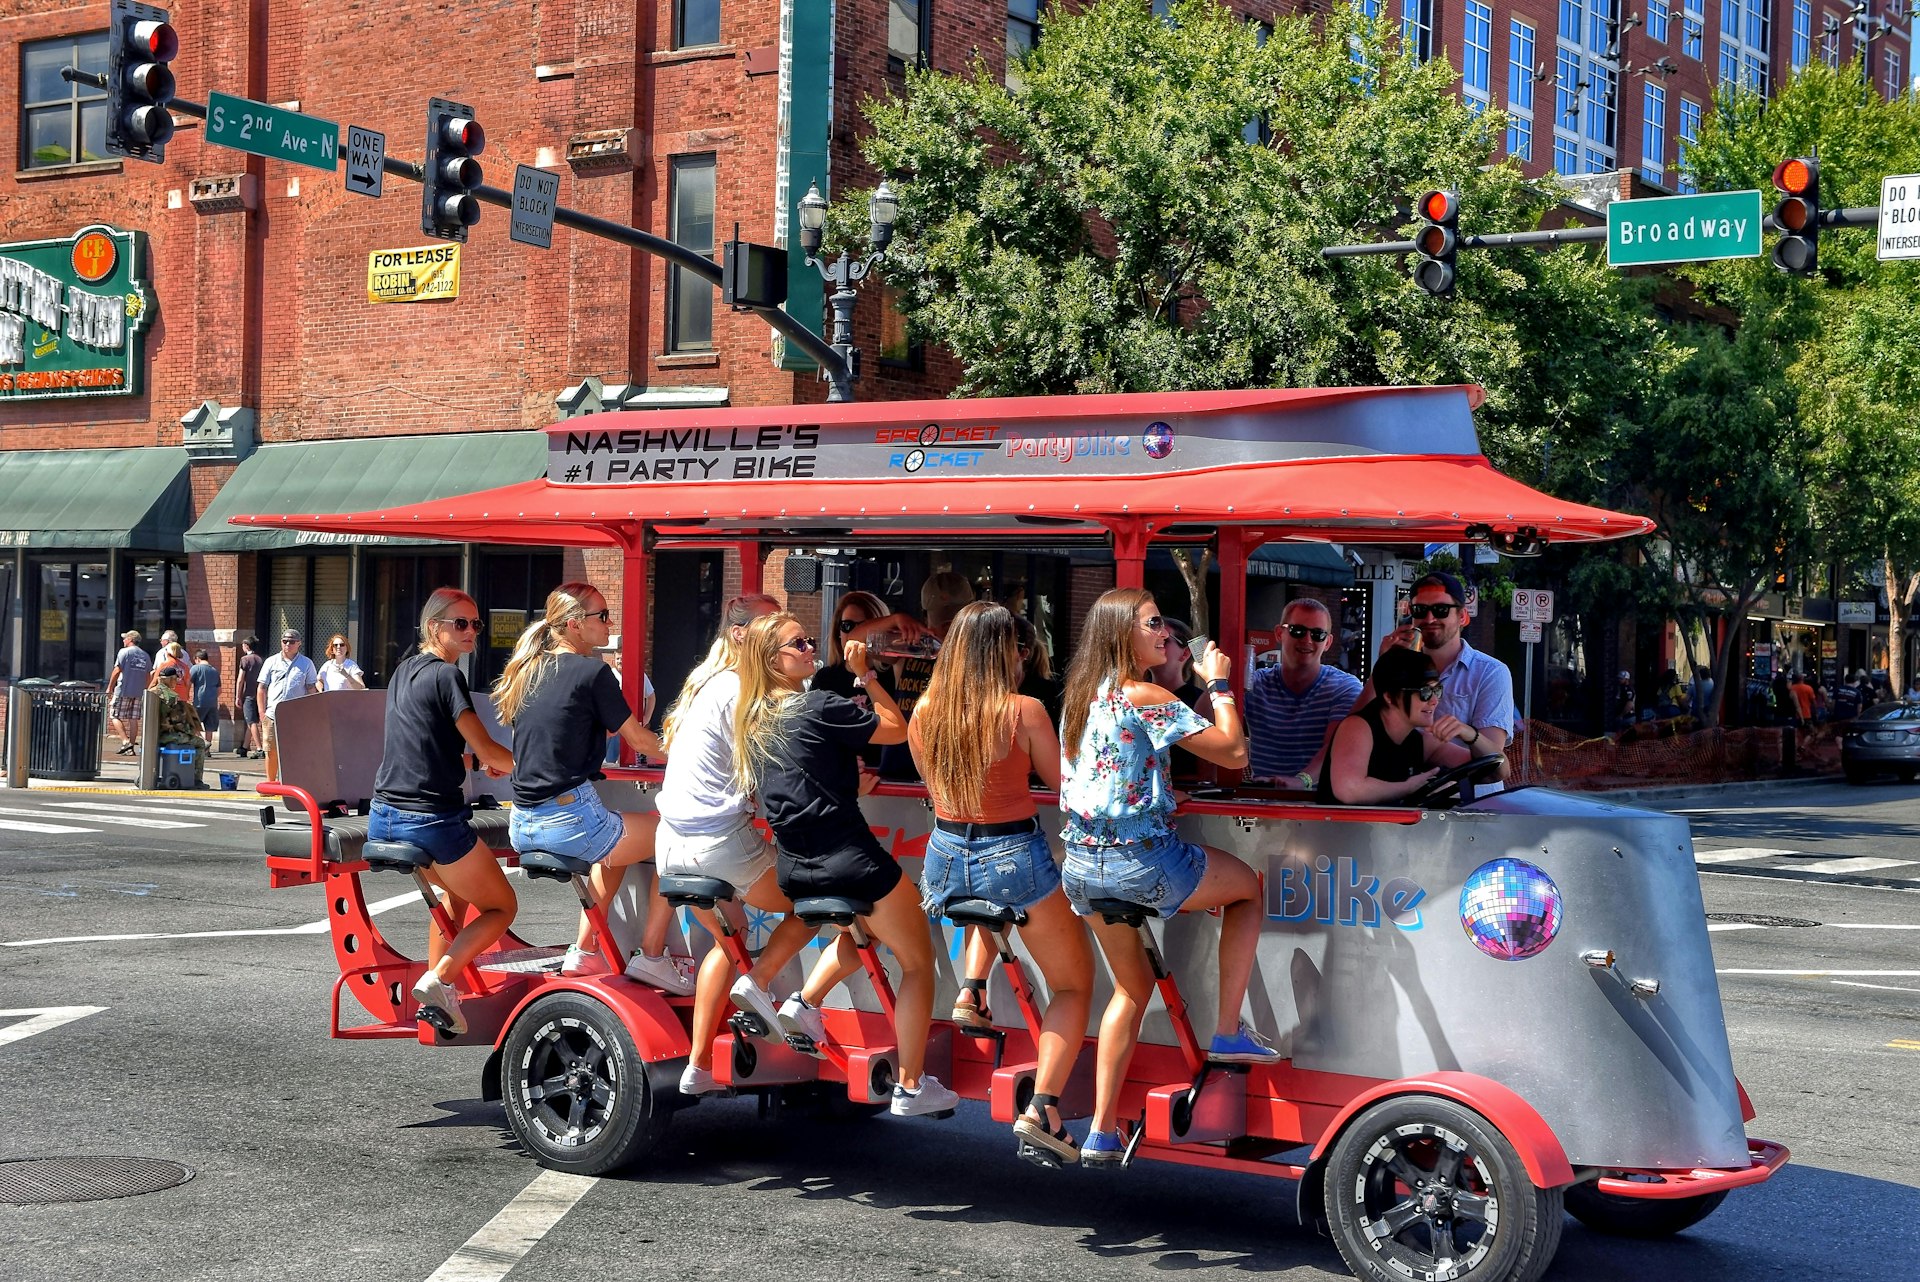 Nashville, TN, USA - September 21, 2019:  Revelers enjoy drinks on a Sprocket Rocket pedal bike tavern on Broadway Street.  These vehicles are powered